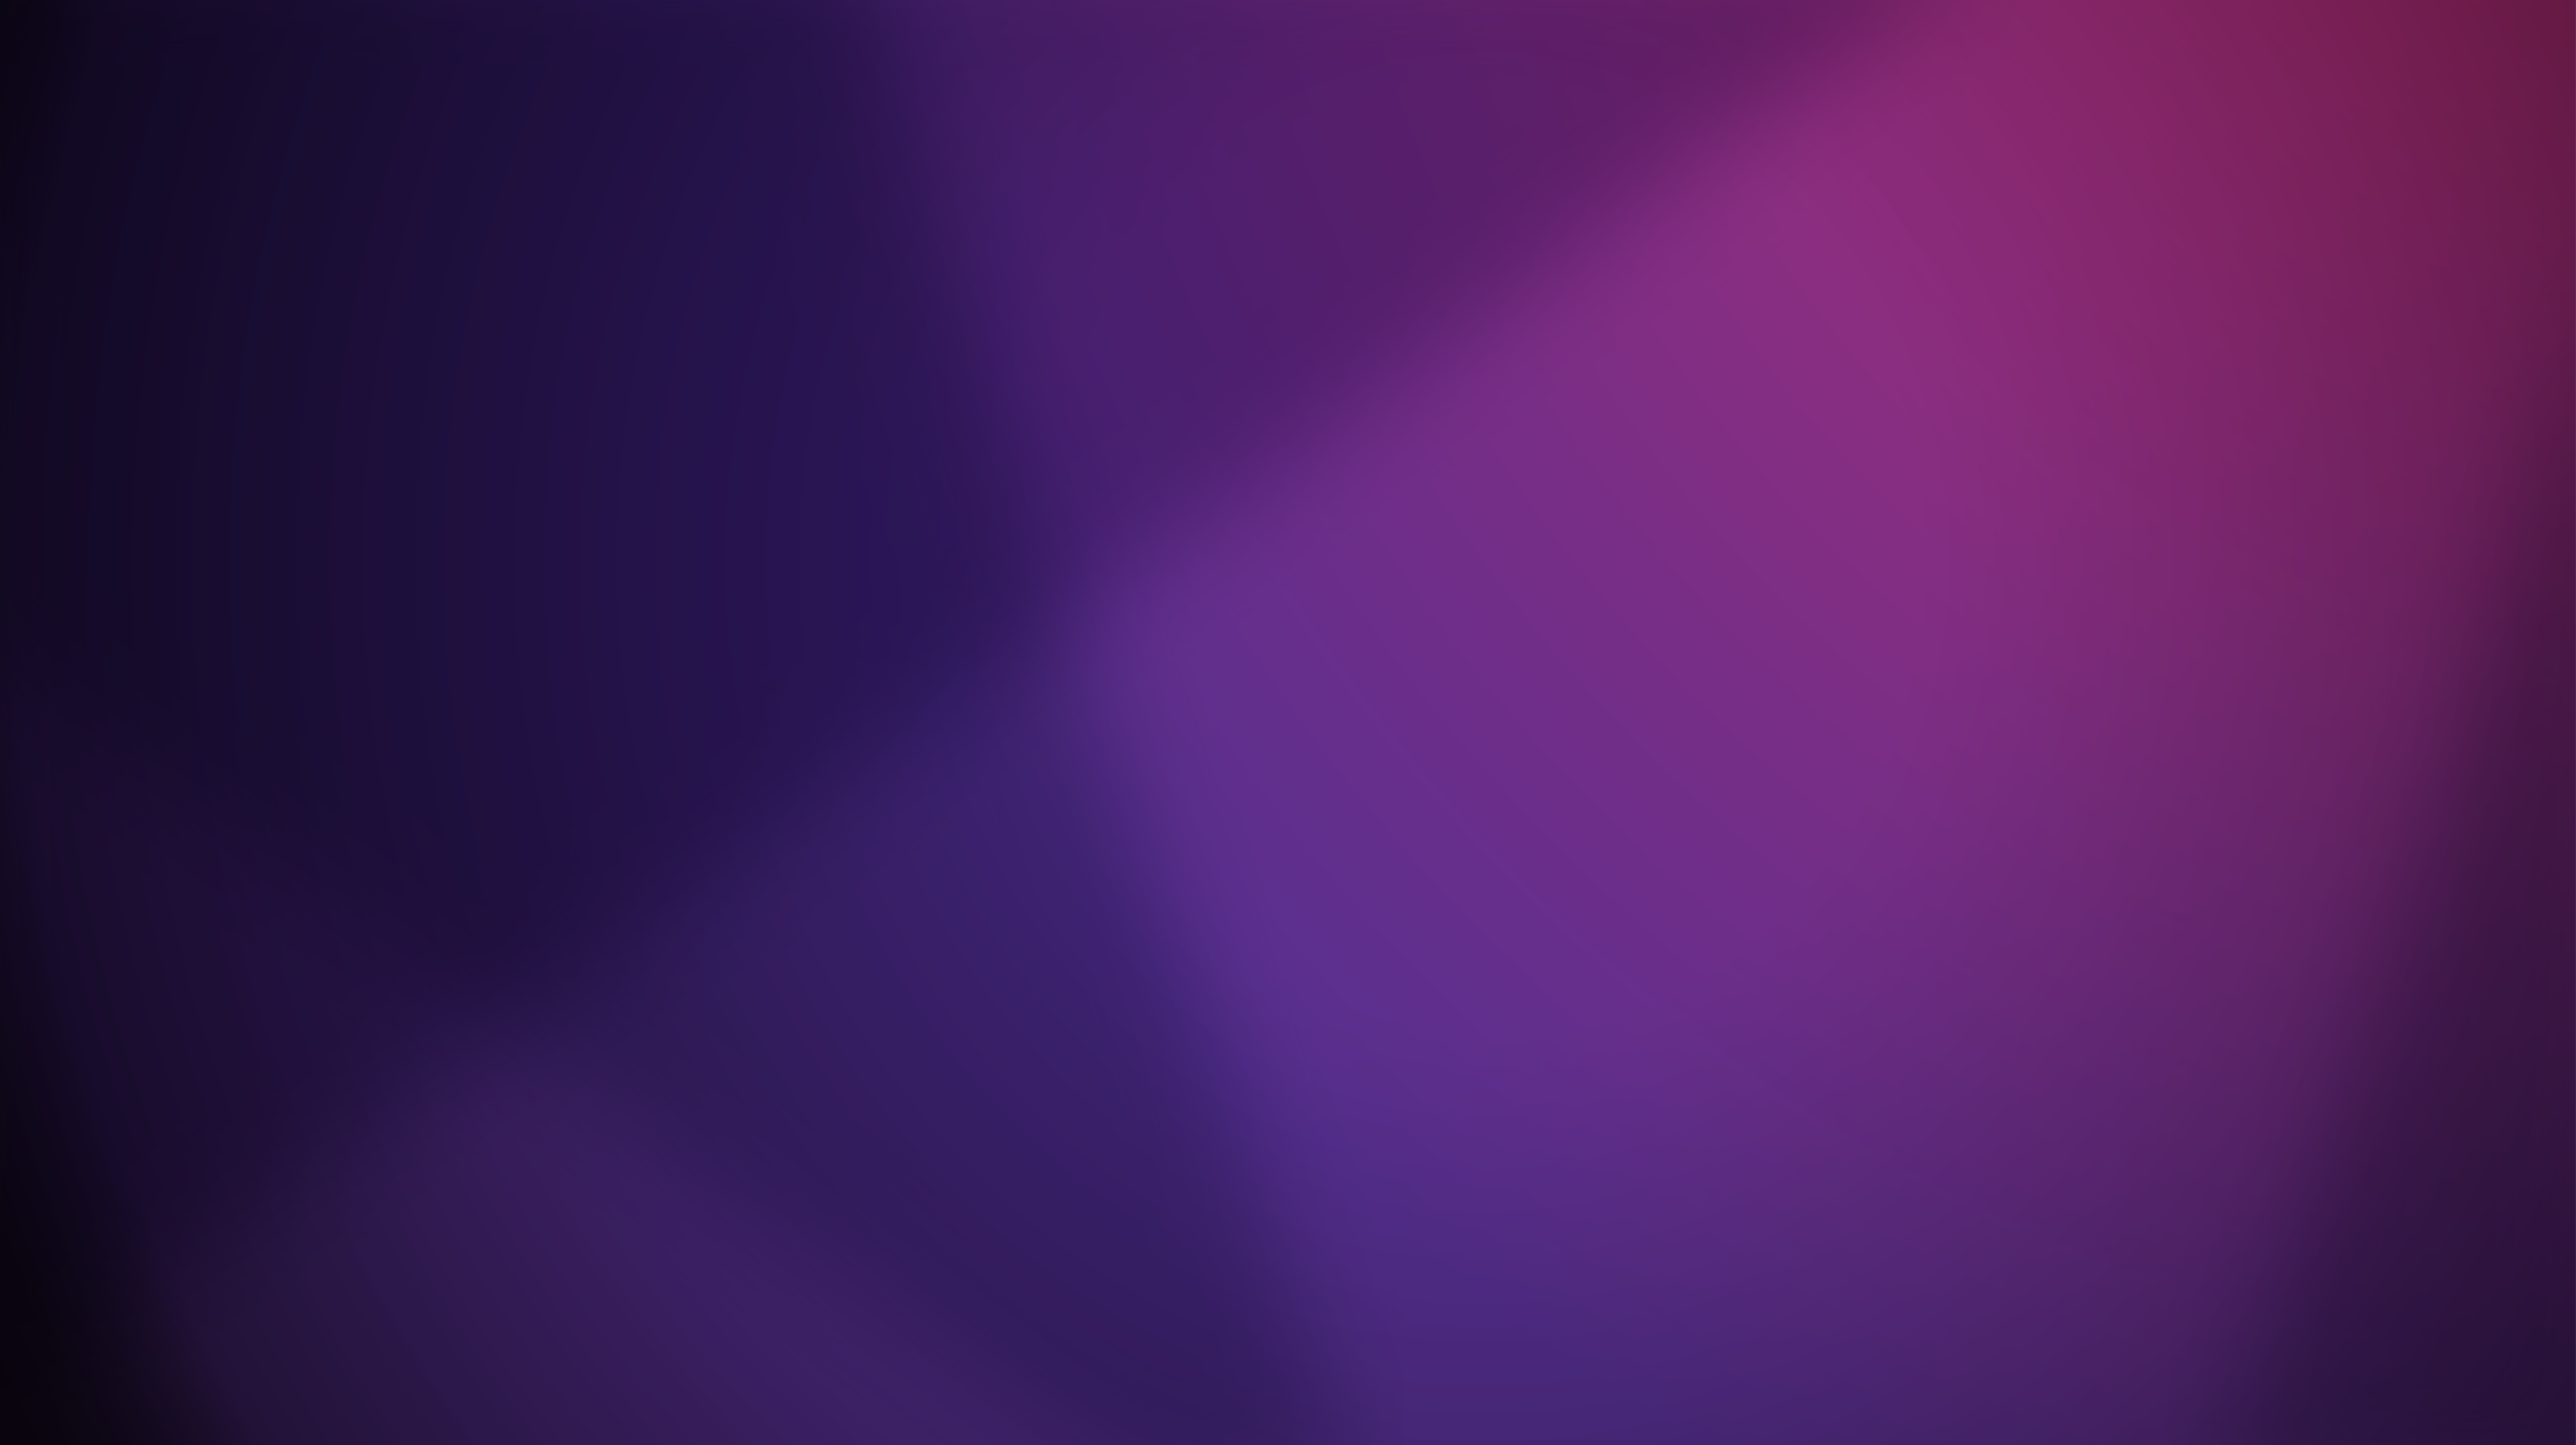 Purple and magenta gradient